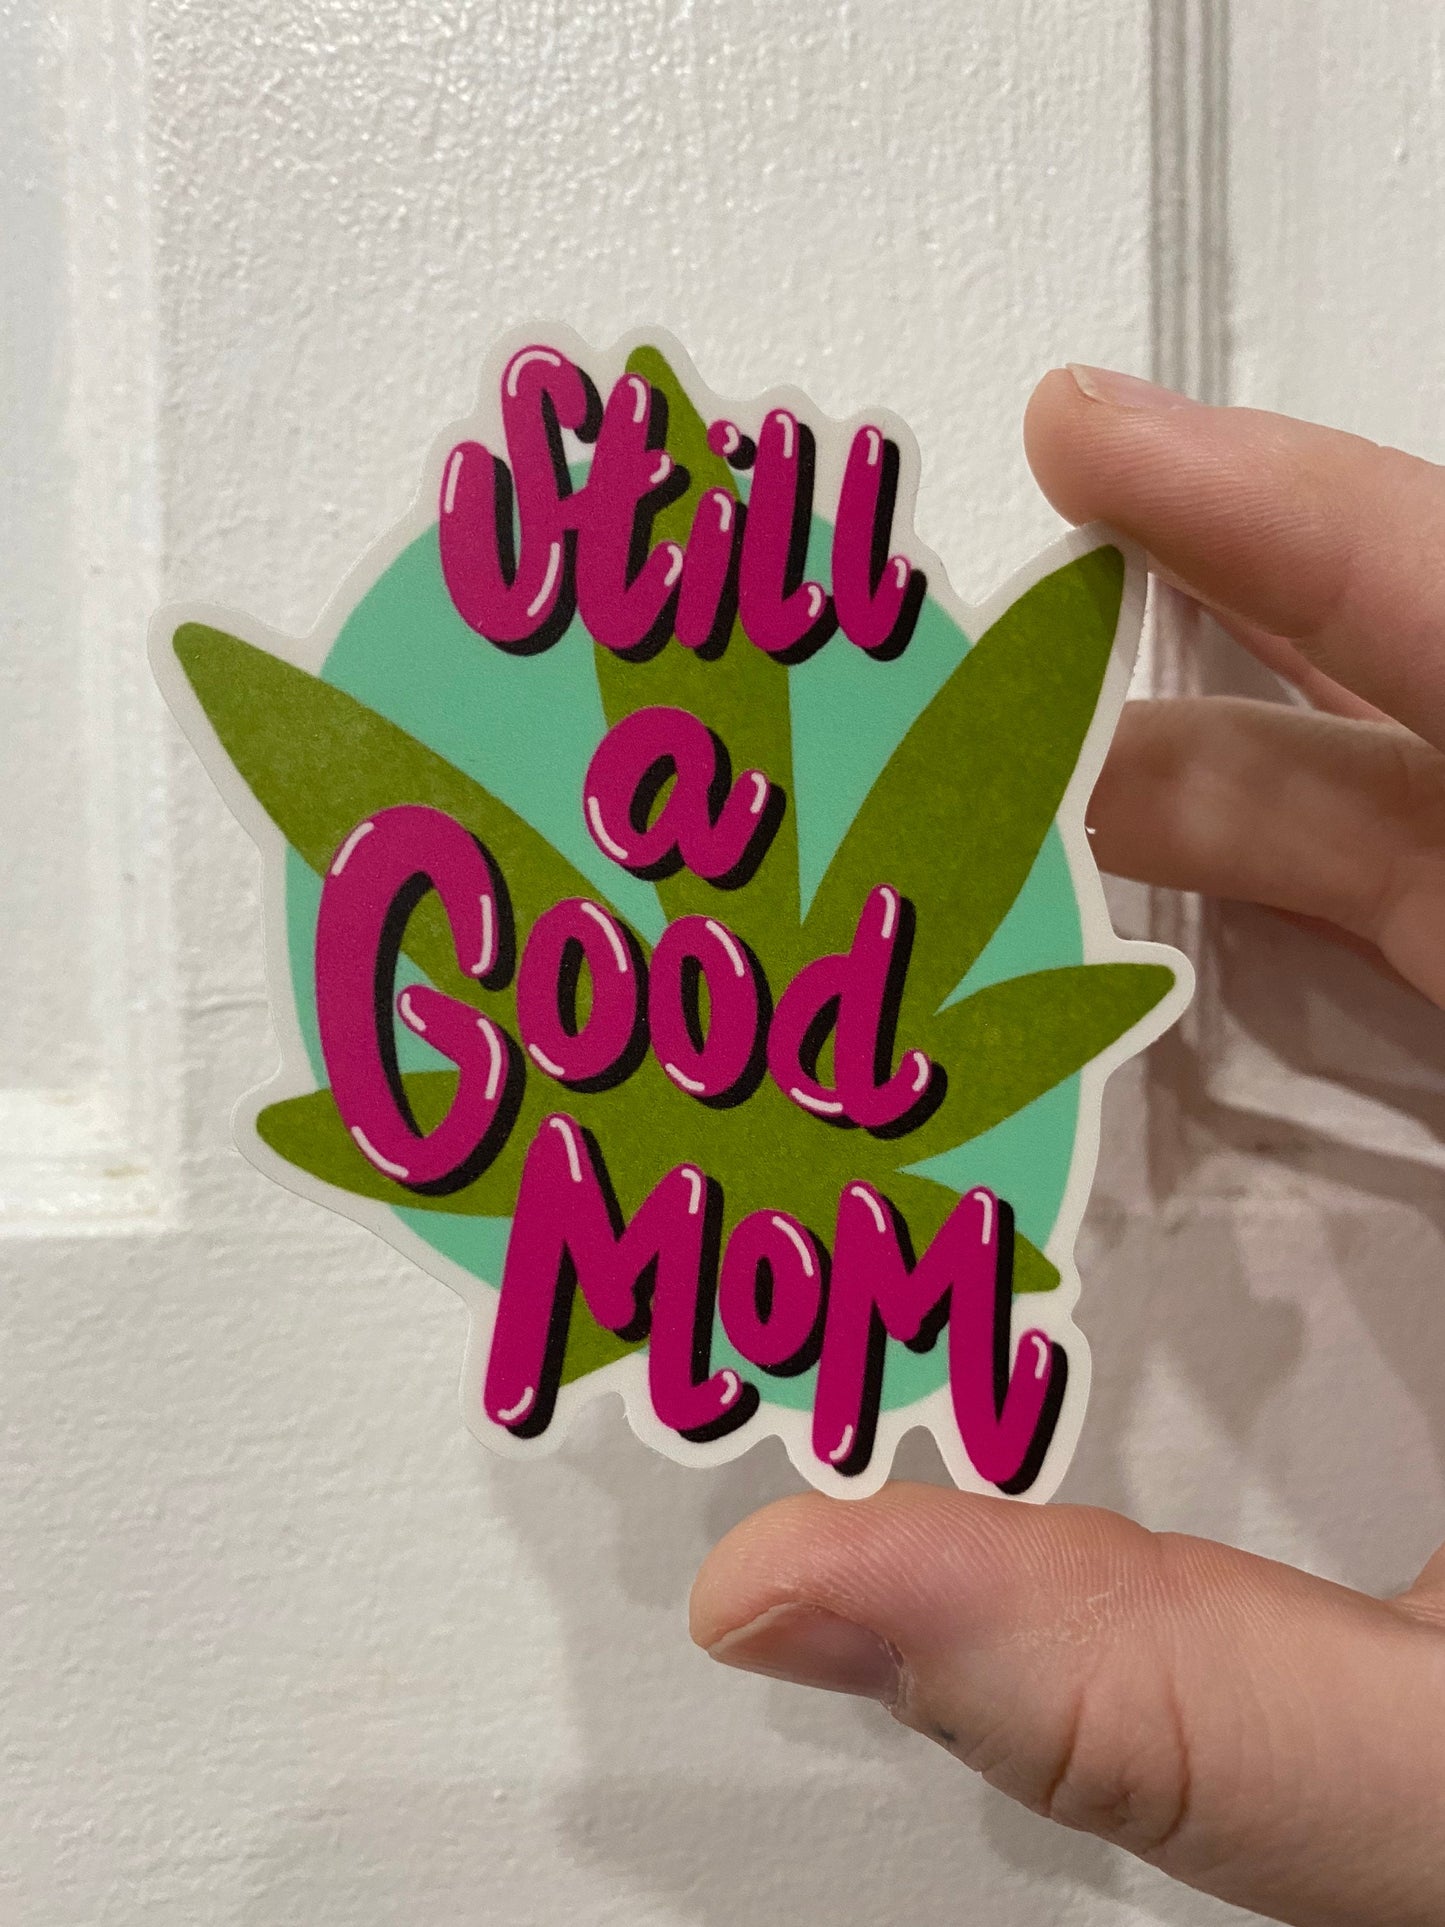 Still a Good Mom Vinyl Sticker | 420 Smoker Sticker for Water Bottles, Travel Mugs, Laptops, Notebooks